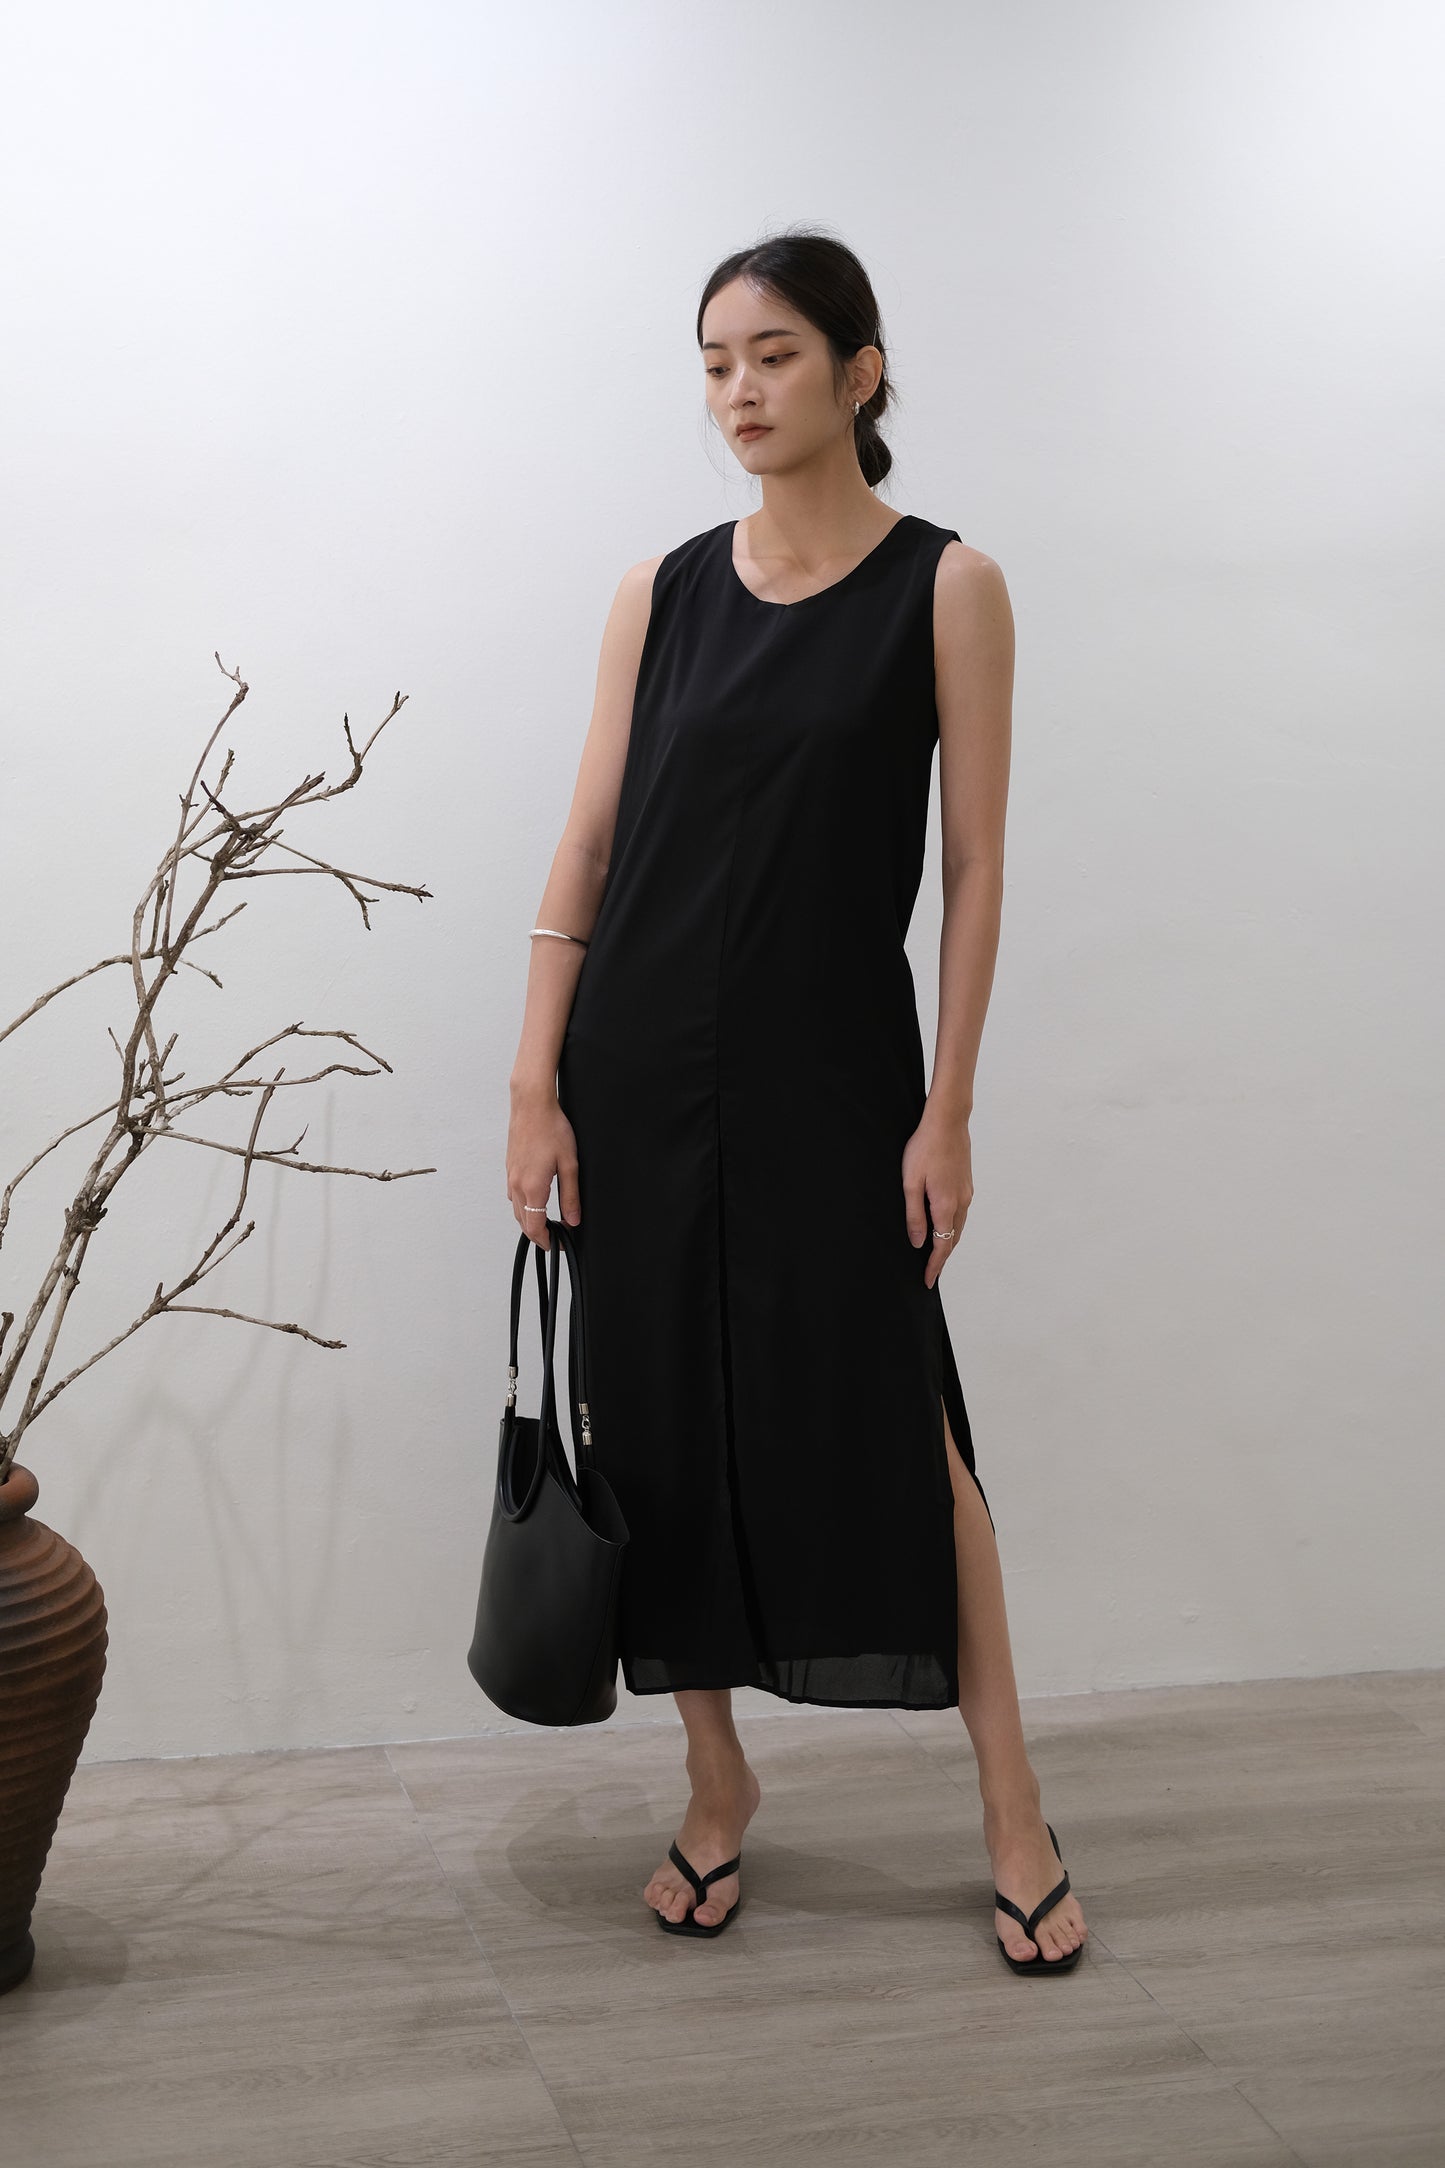 Simple sleeveless vest dress in classic black